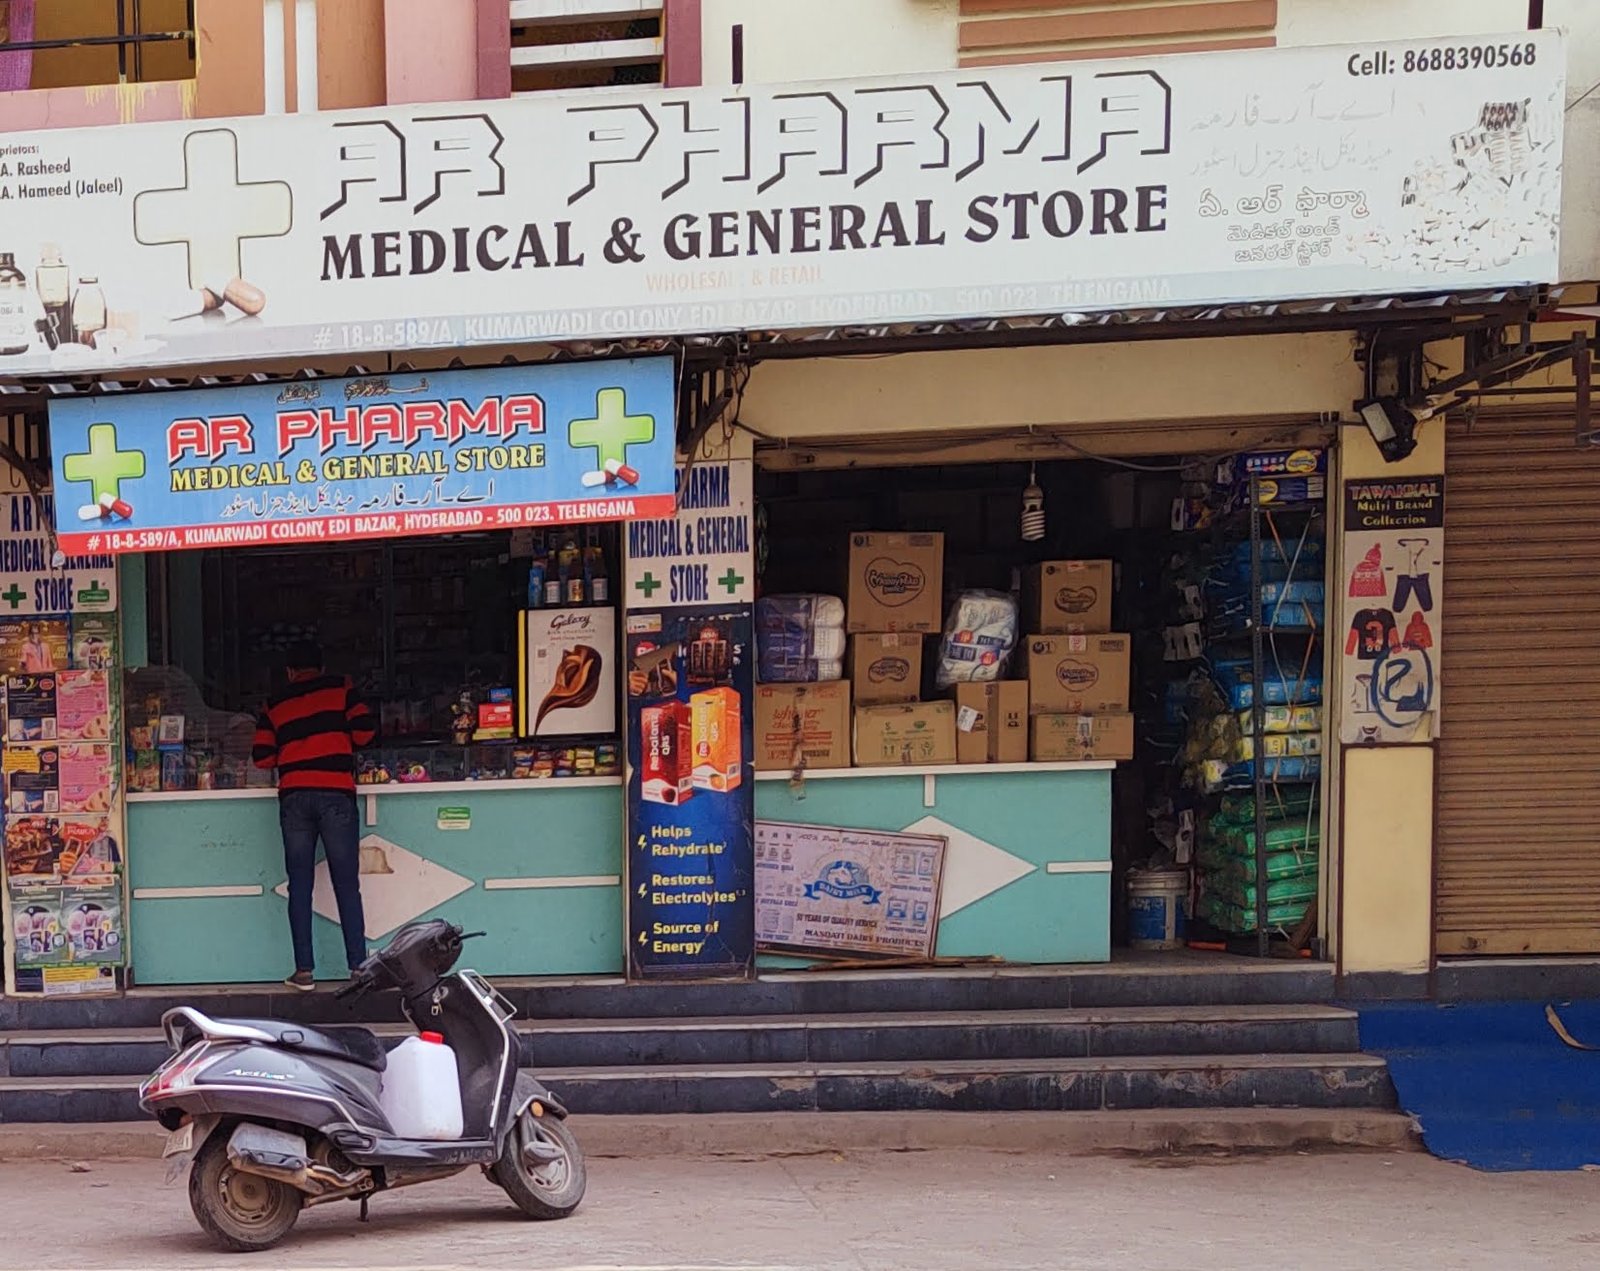 AR Pharma Medical & General Store in Edi Bazar